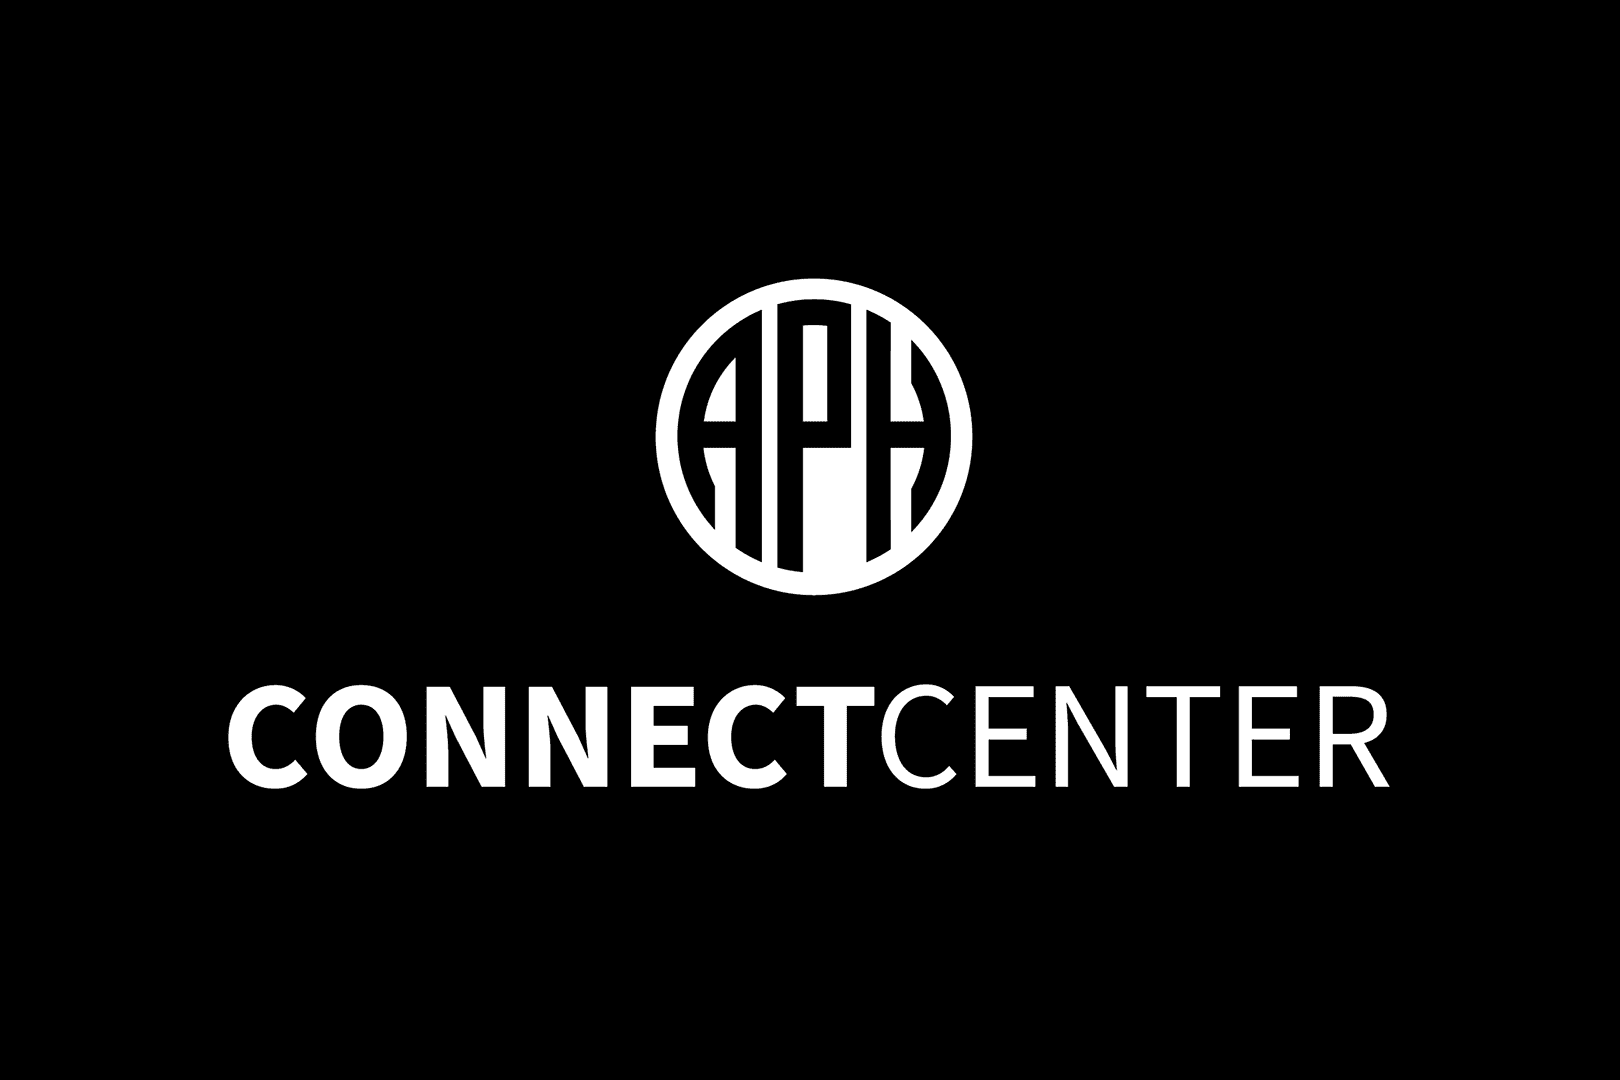 APH ConnectCenter wordmark.